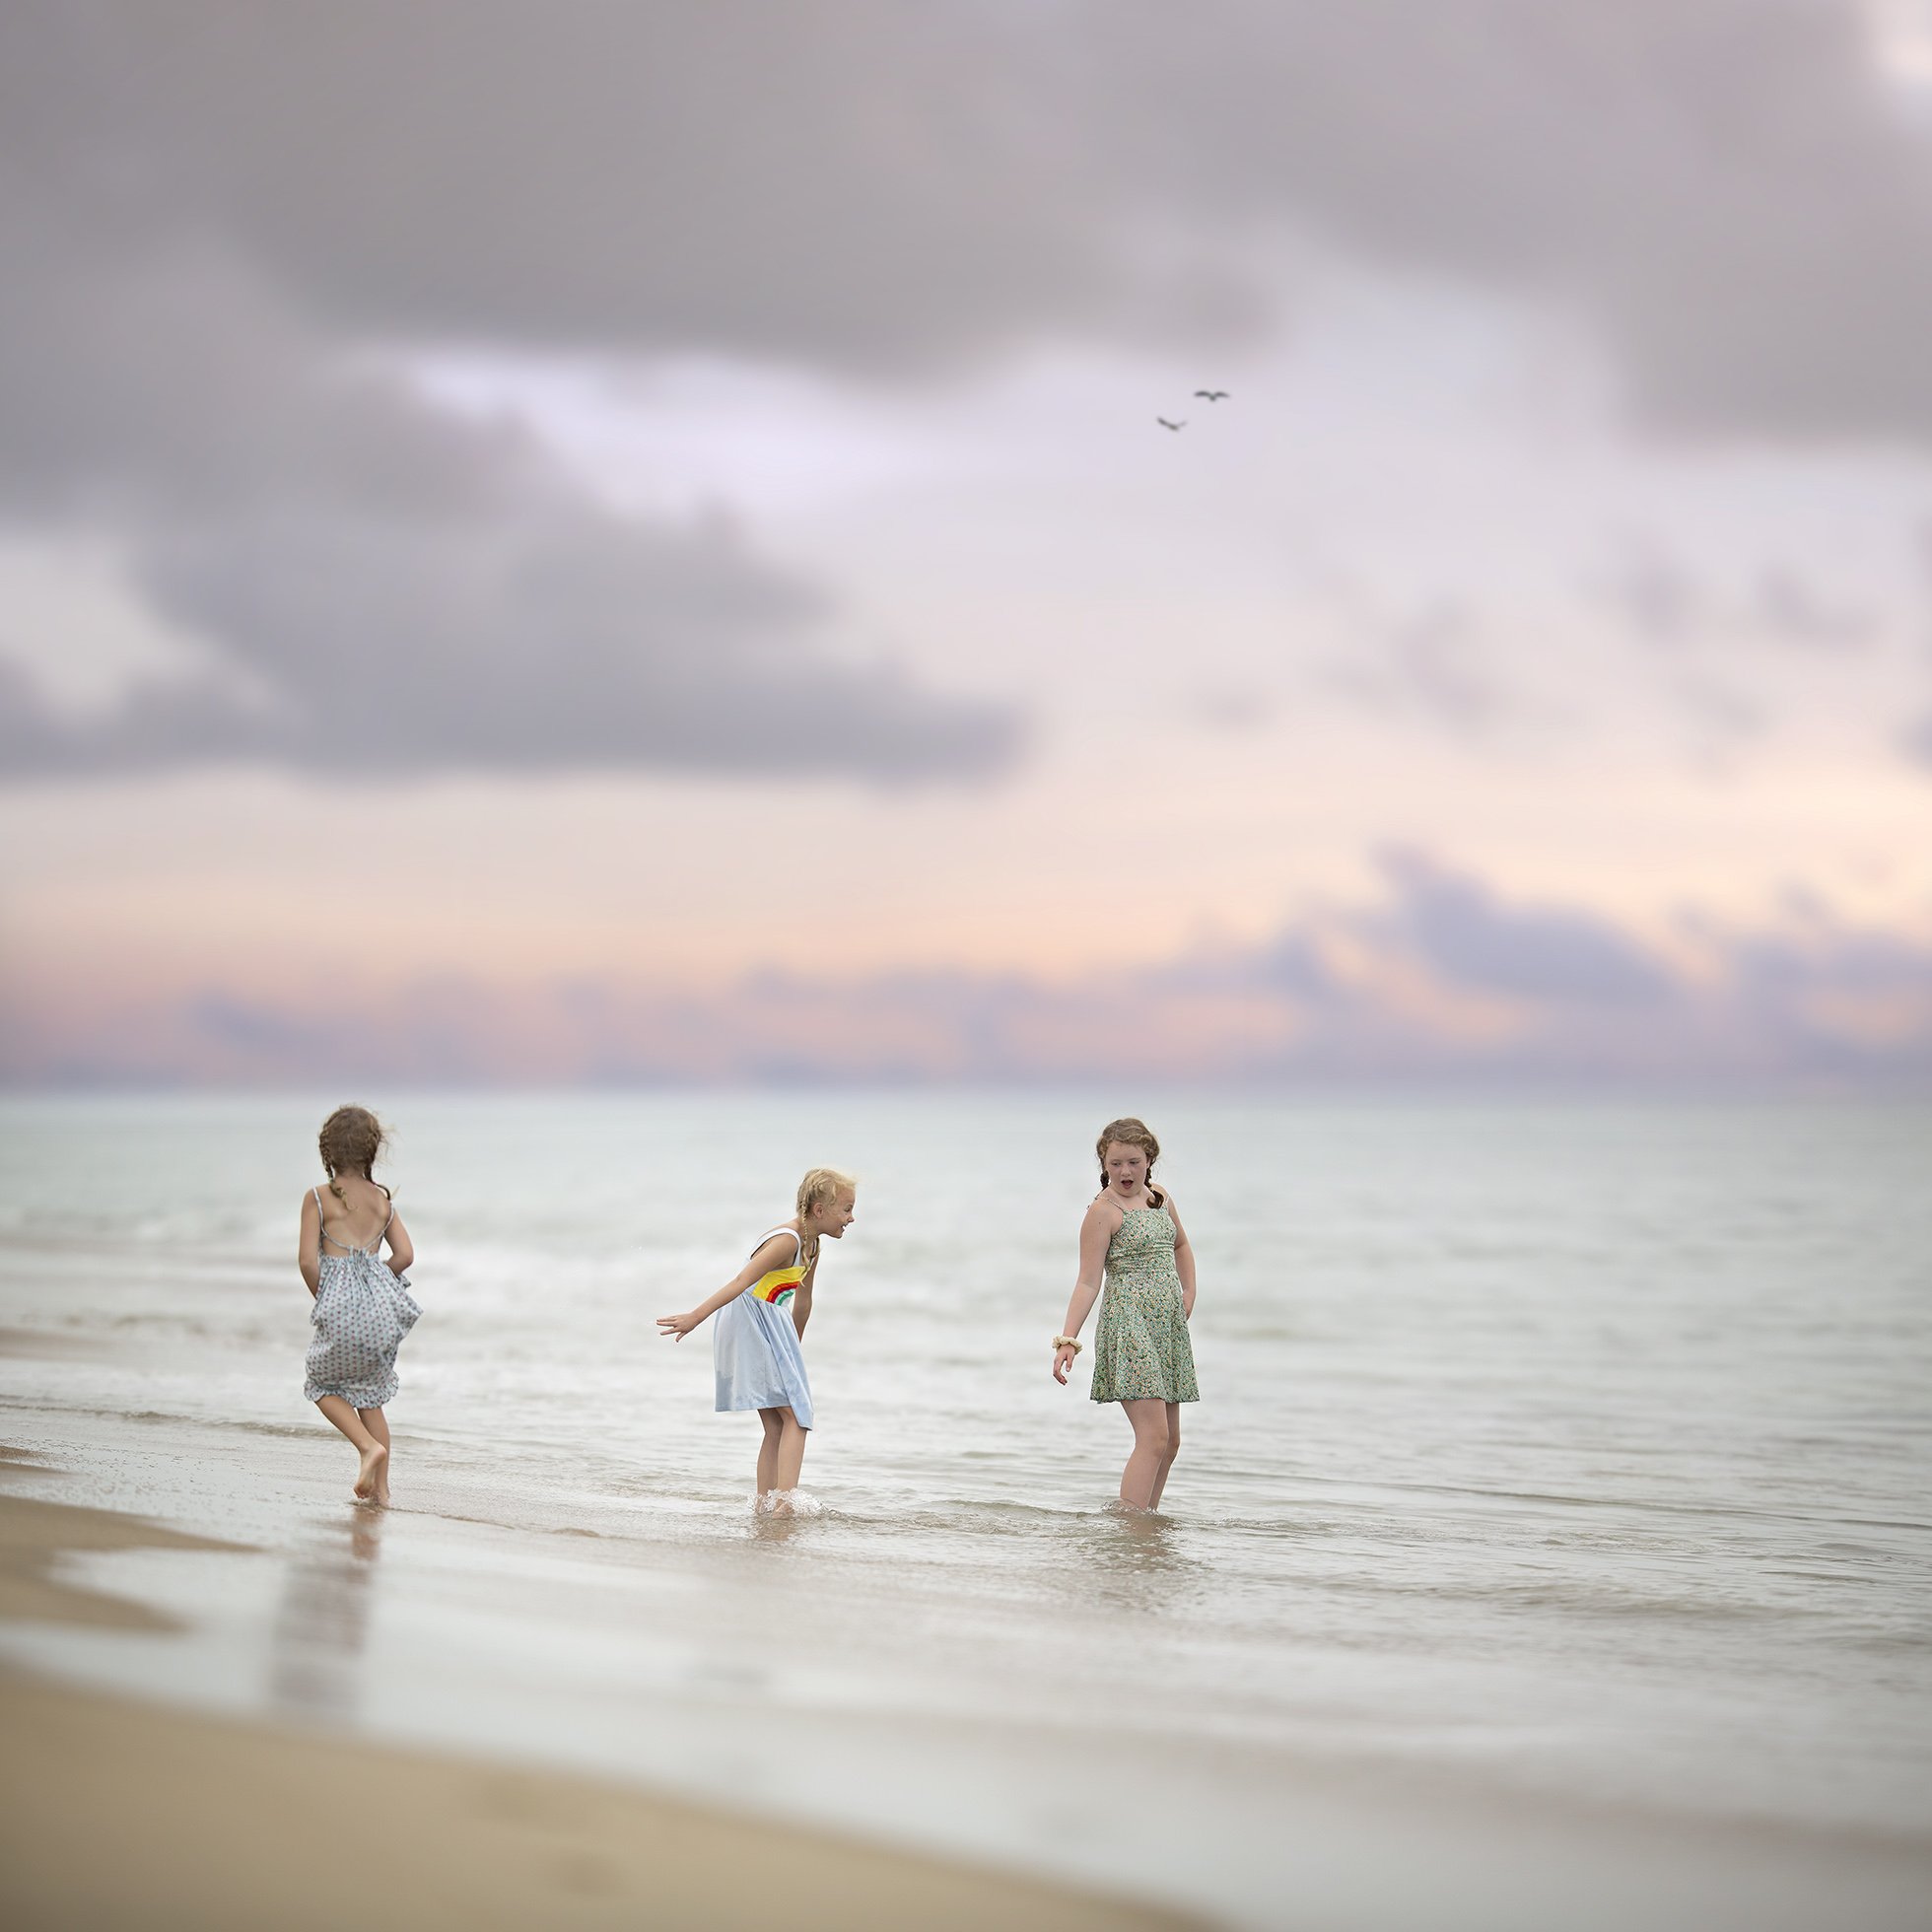 Beach Photography - Three little girls splashing in the waves